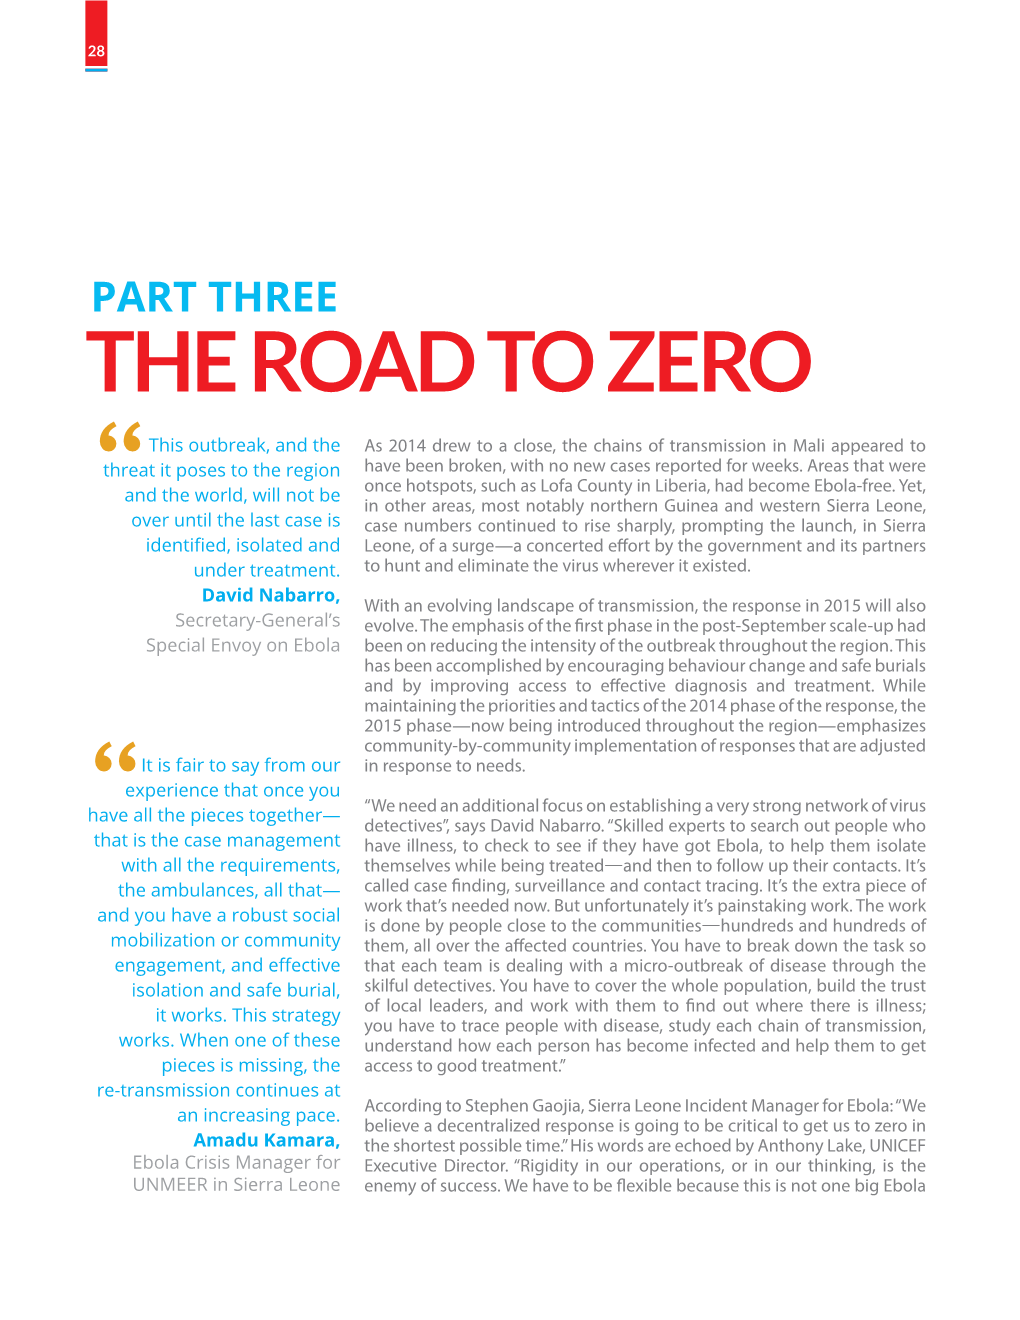 Part 3: the Road to Zero